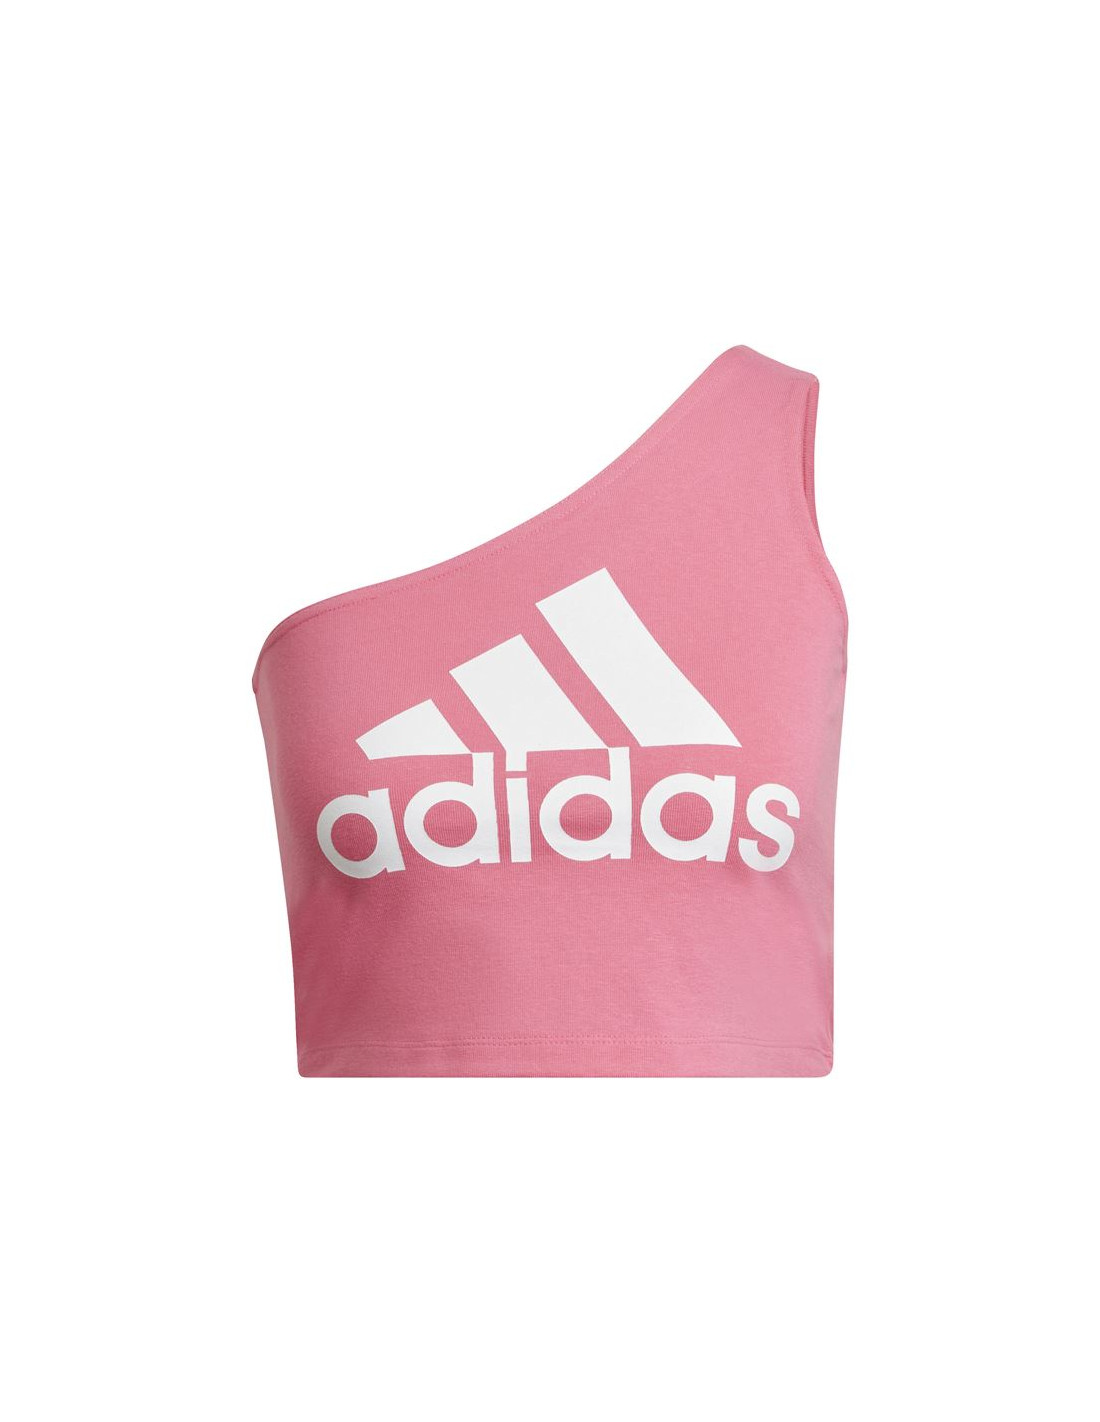 Camiseta adidas future icons mujer pink